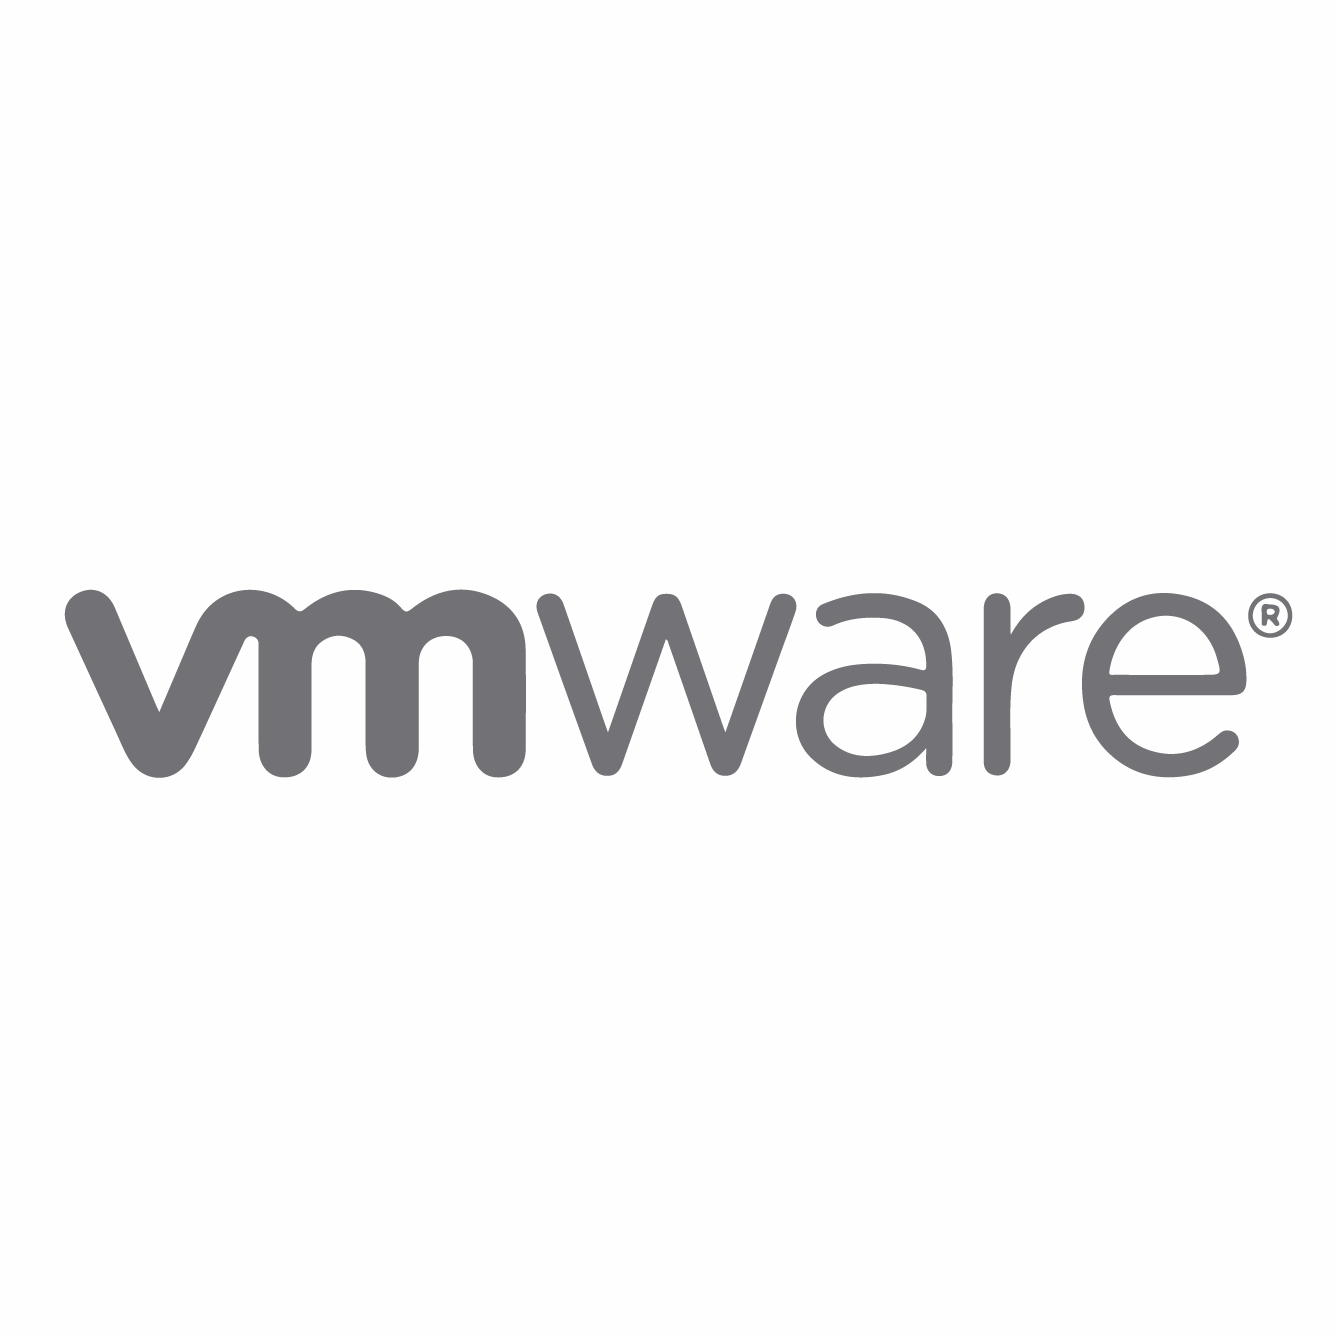 https://securetech.local/wp-content/uploads/2019/02/11.VMWARE.png